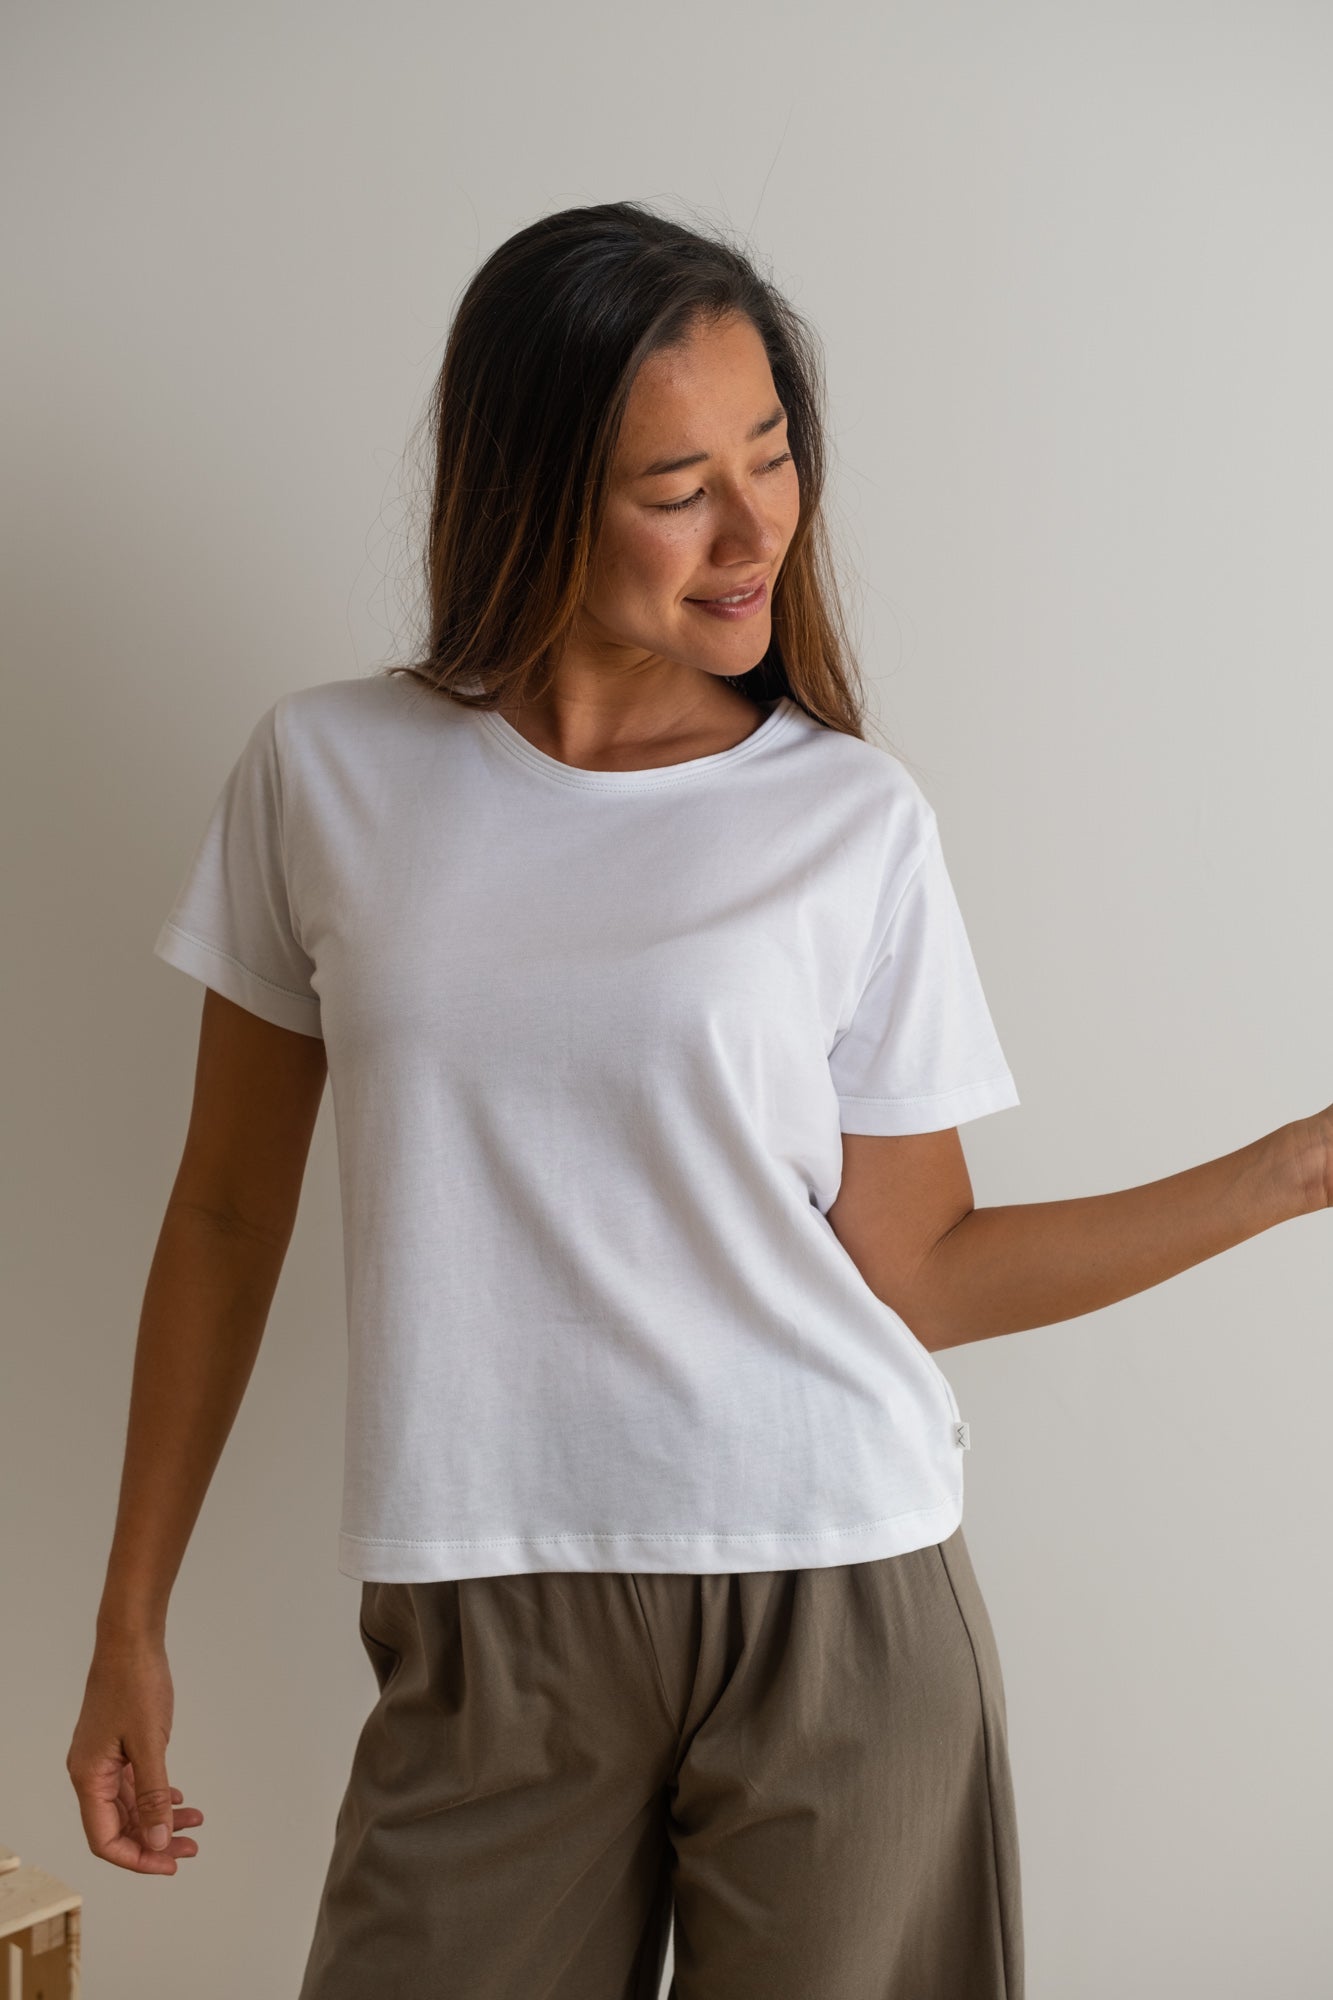 MIA Moda Regenerativa Camisetas S Camiseta Esencial mujer - blanco